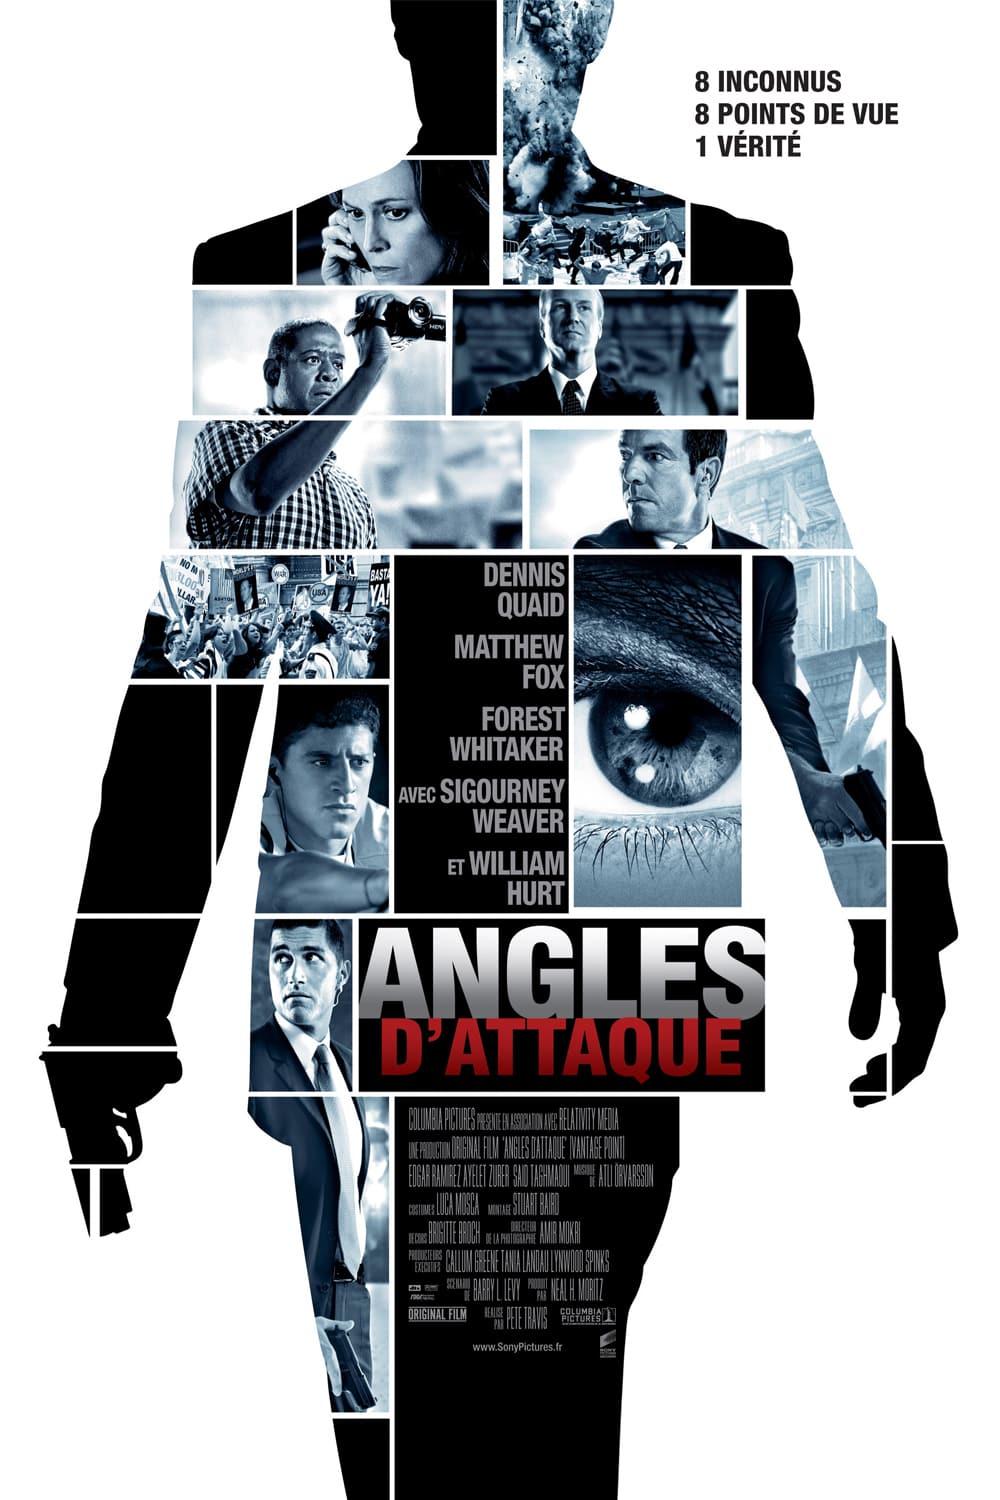 Affiche du film "Angles d'attaque"